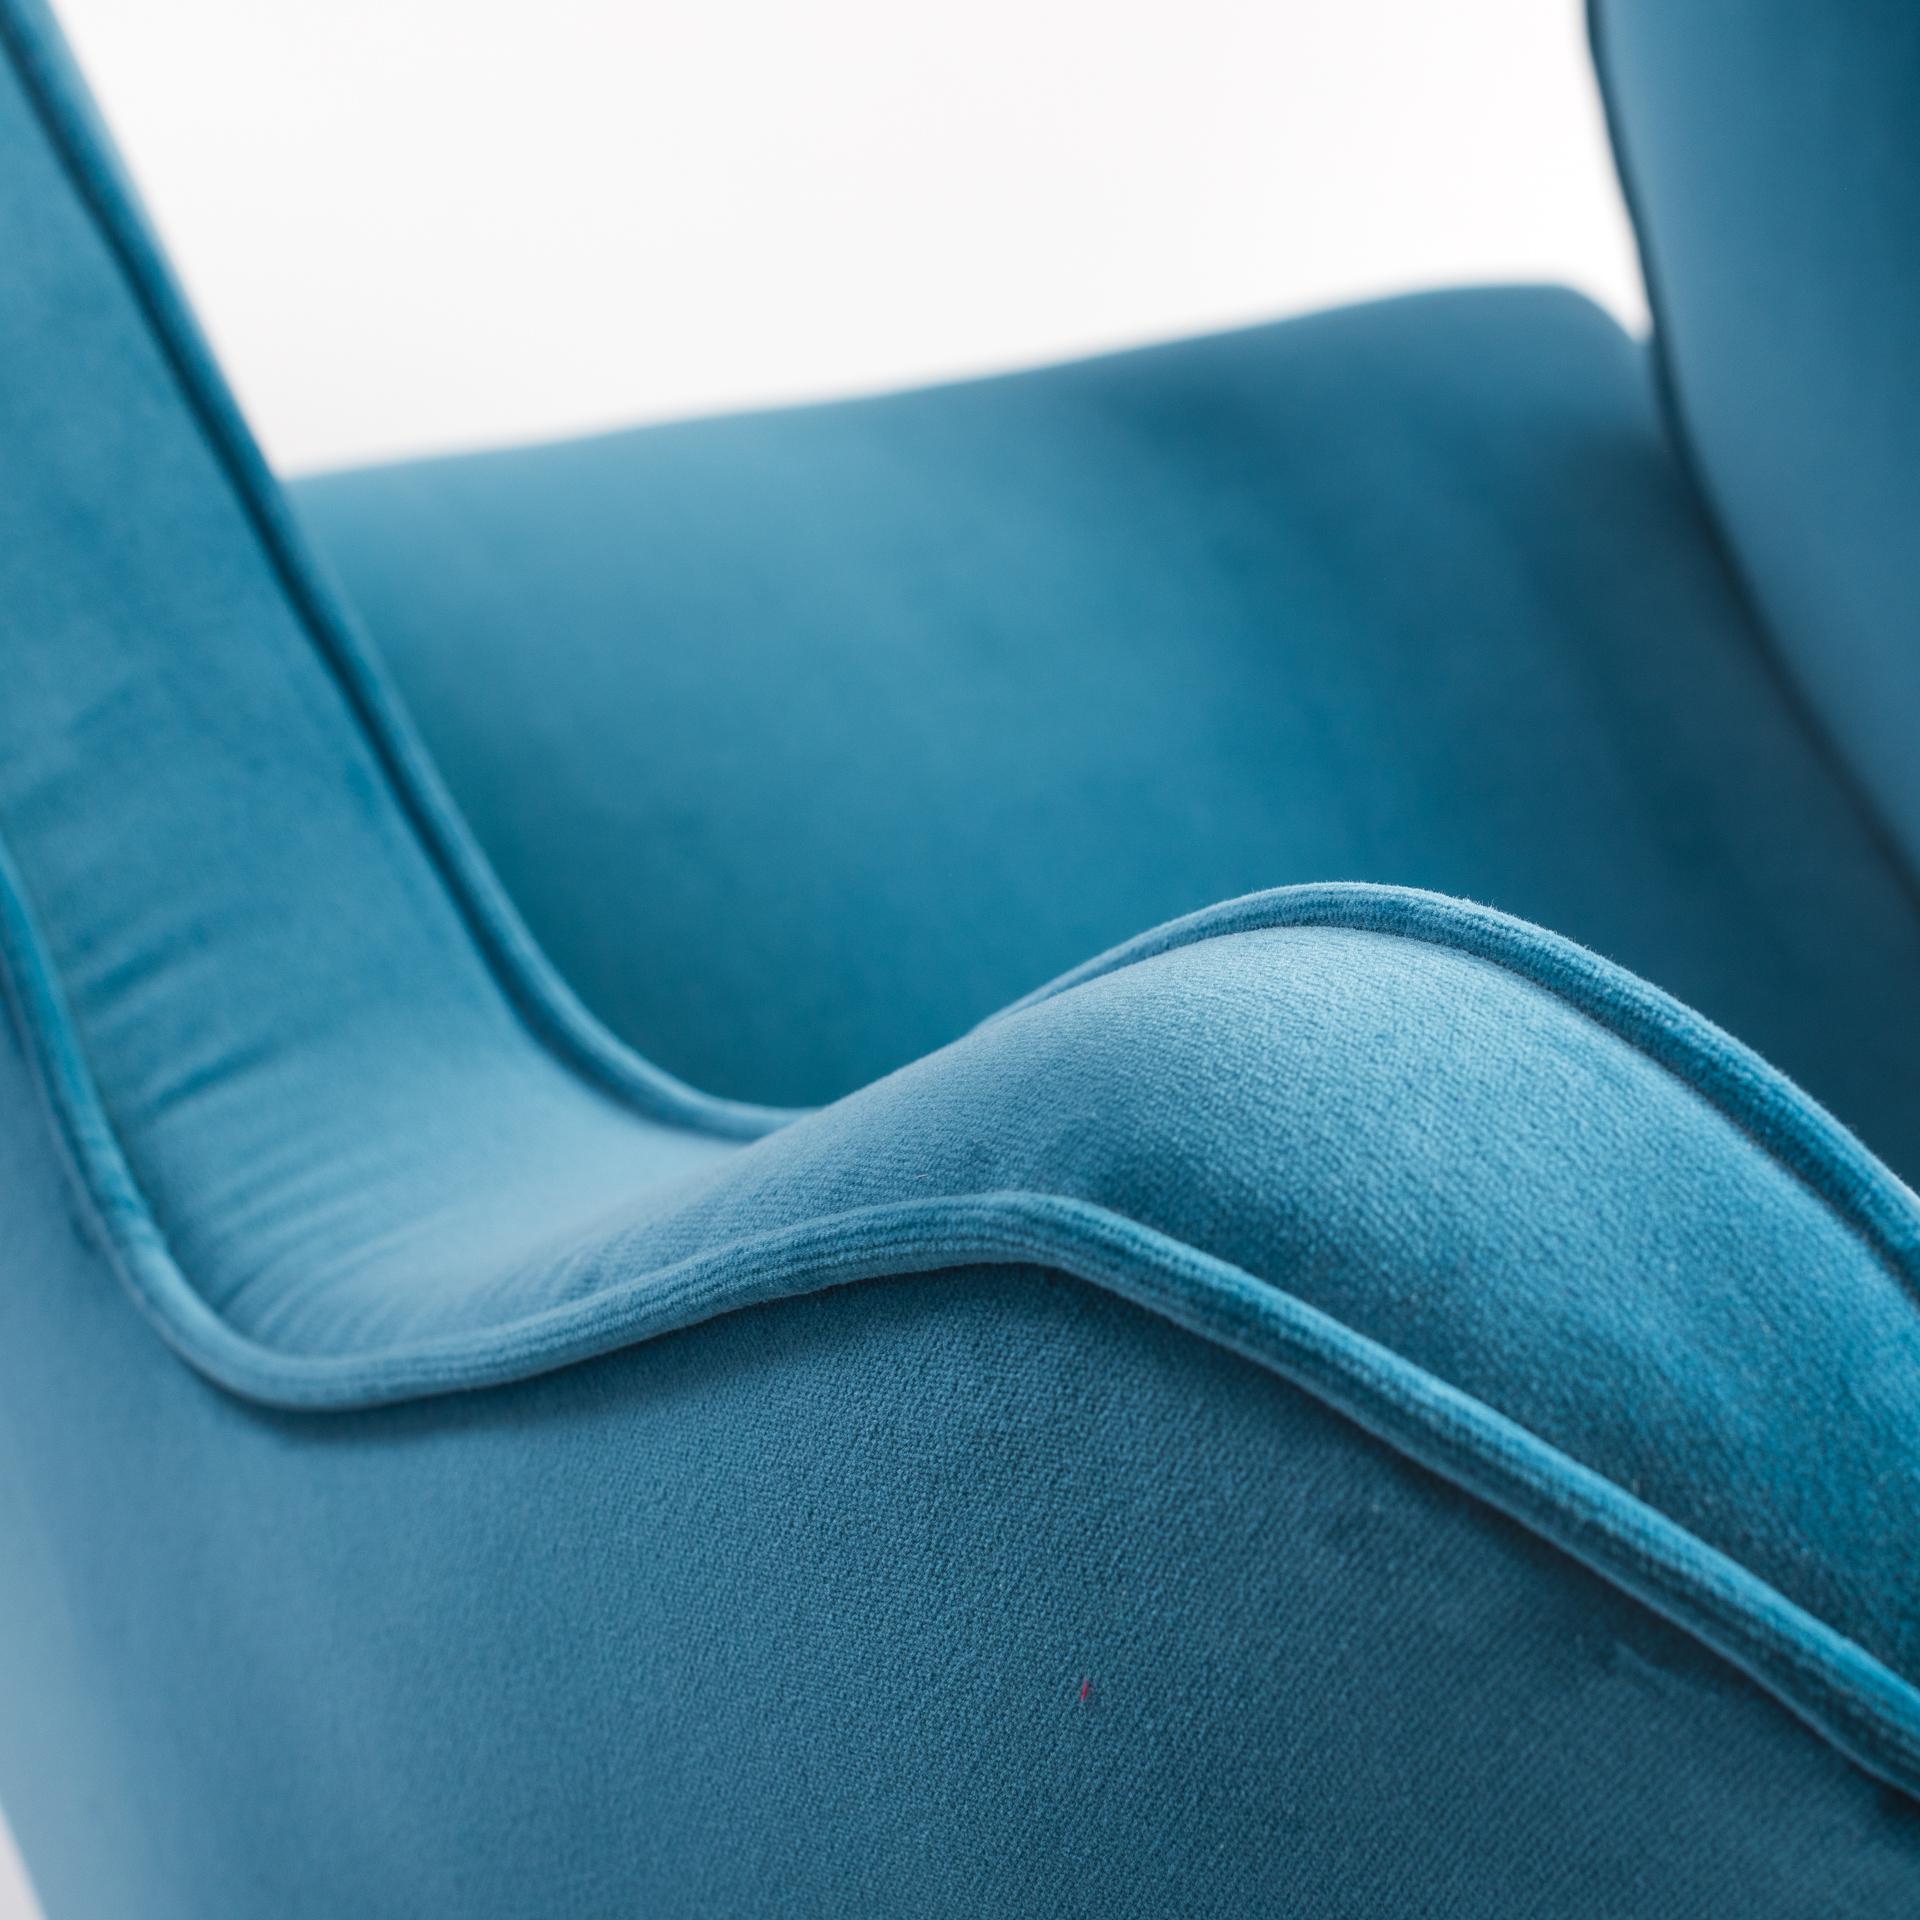 Mid-20th Century Pair of Italian Midcentury Armchairs Re-Upholsterd in Turquoise Colored Velvet